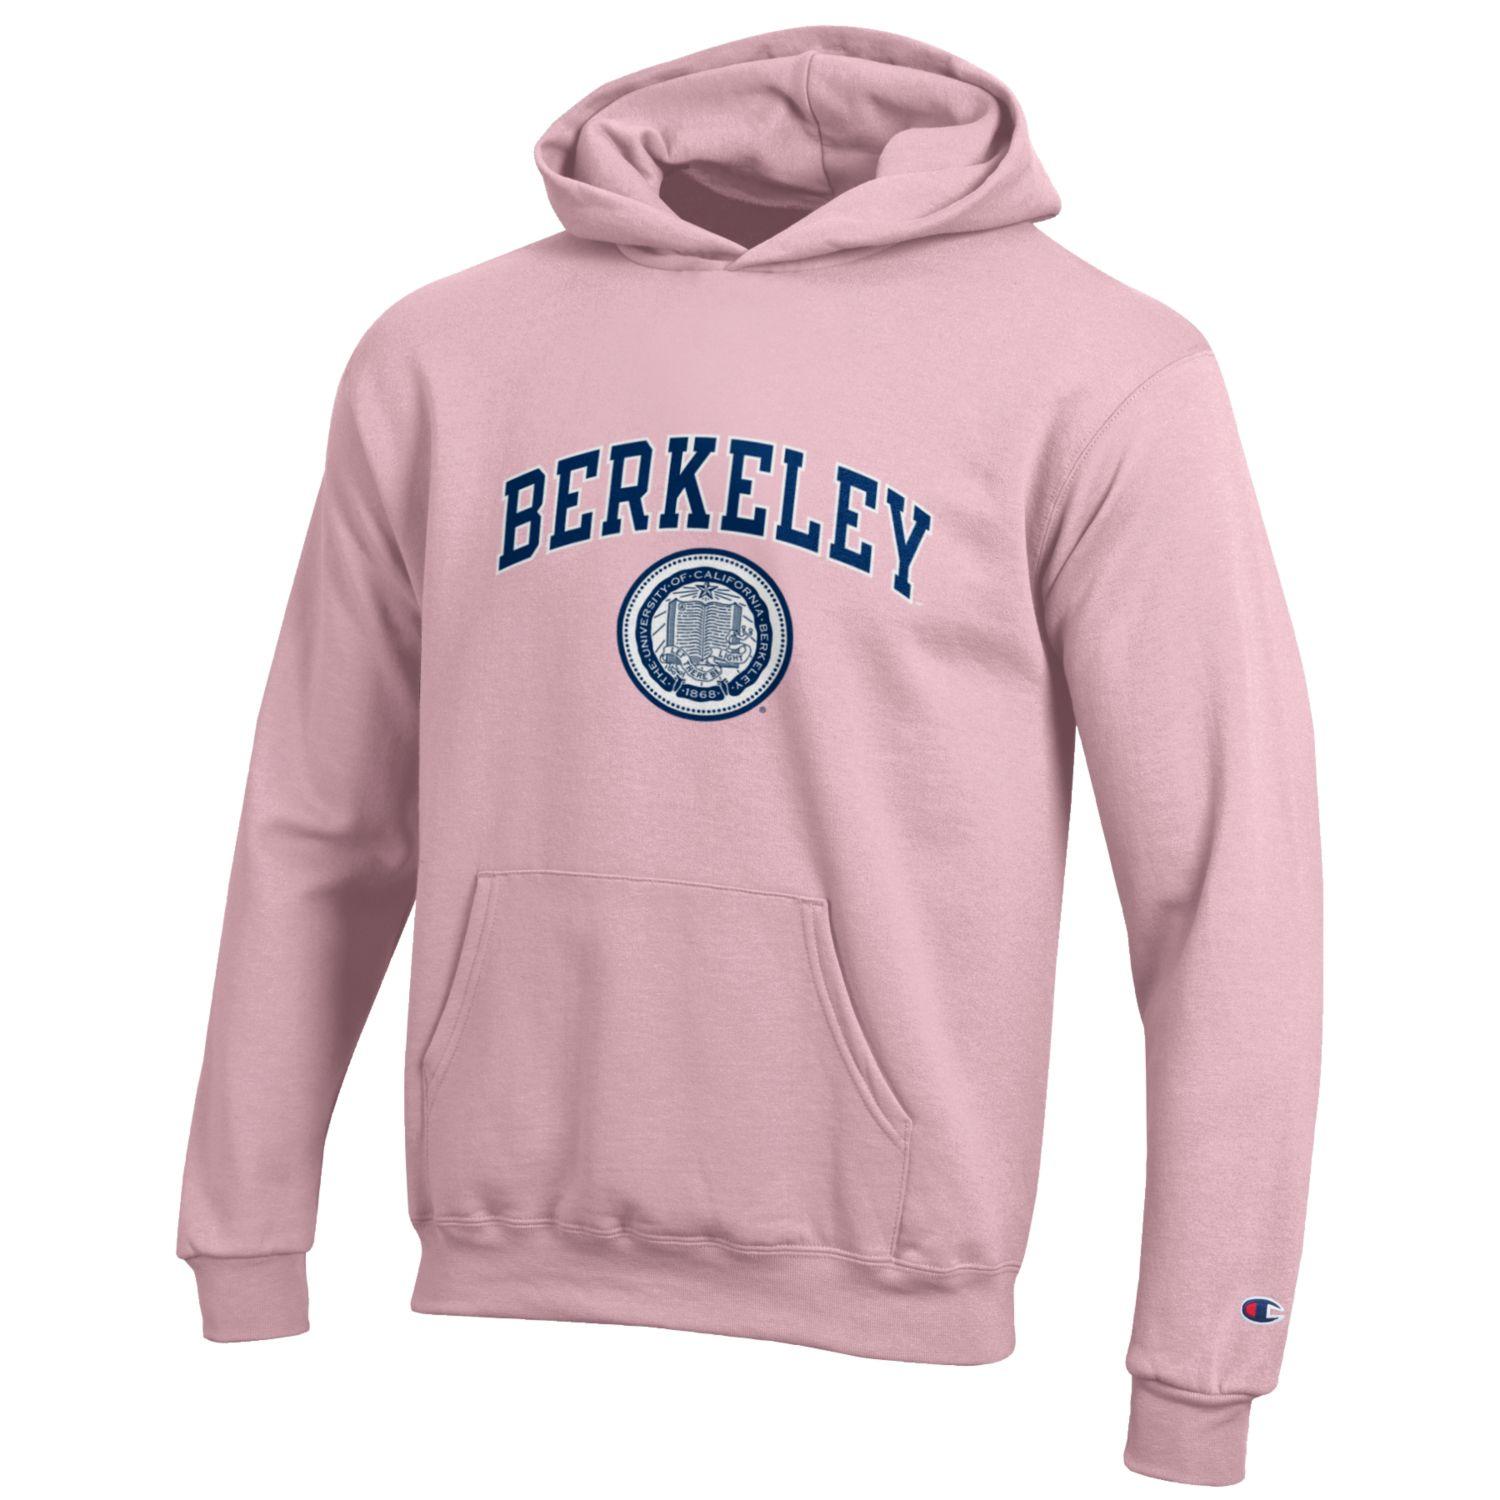 U.C. Berkeley arch & seal Champion youth hoodie sweatshirt-Pink-Shop College Wear